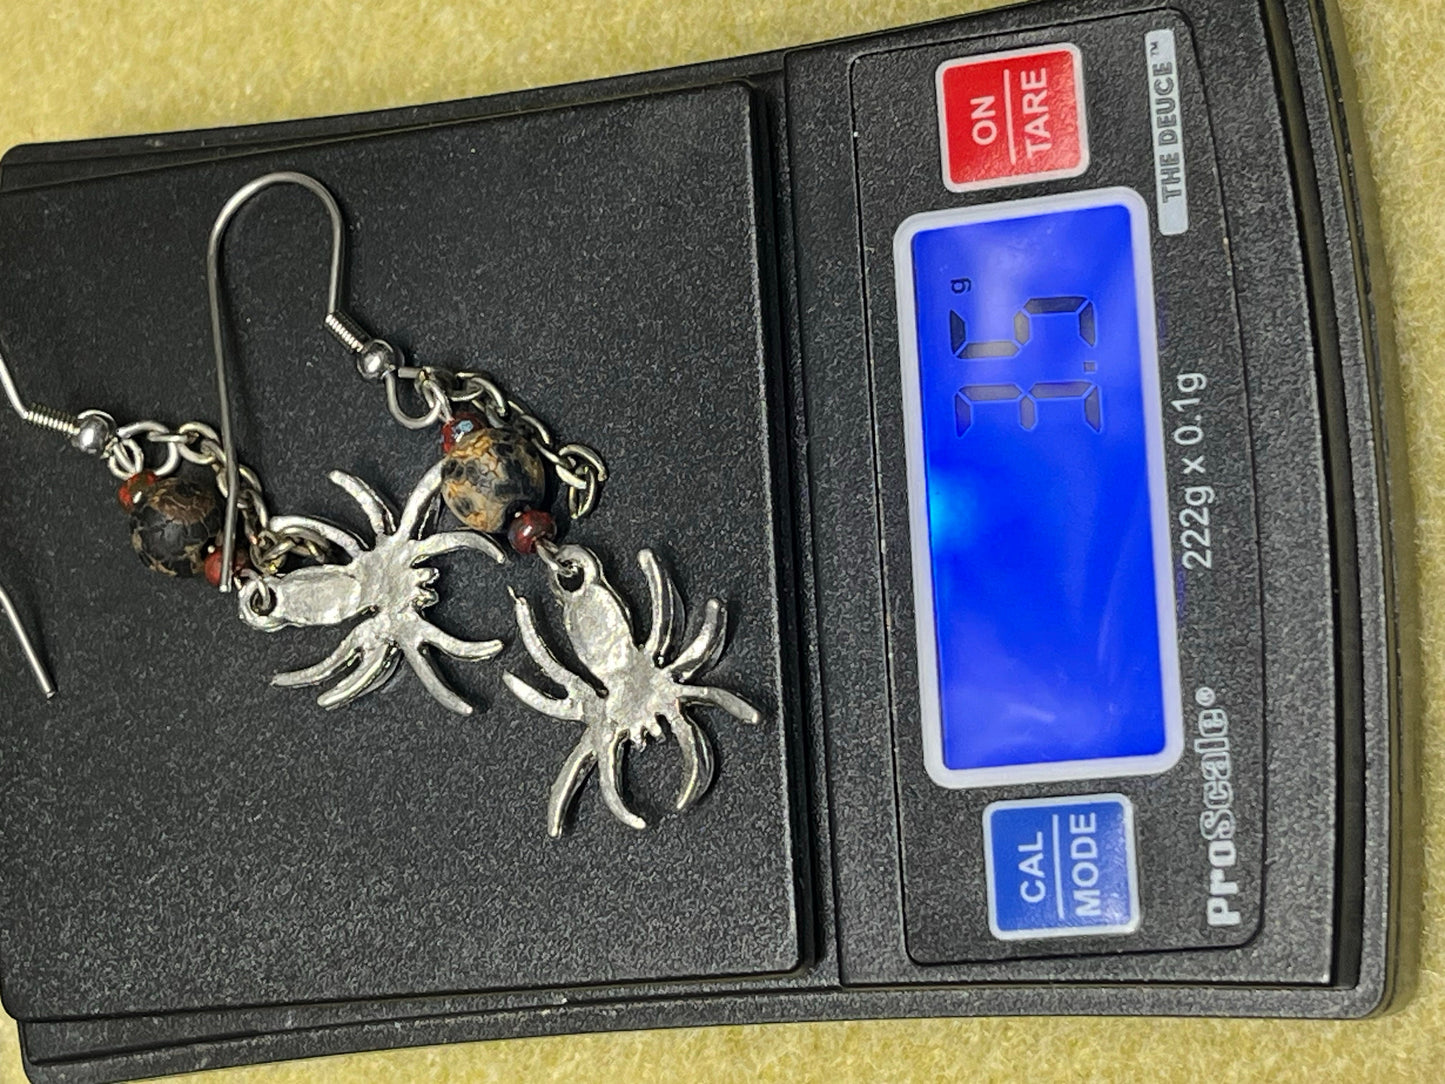 Tibetan Agate Spider Earrings, WireWeavedUniques